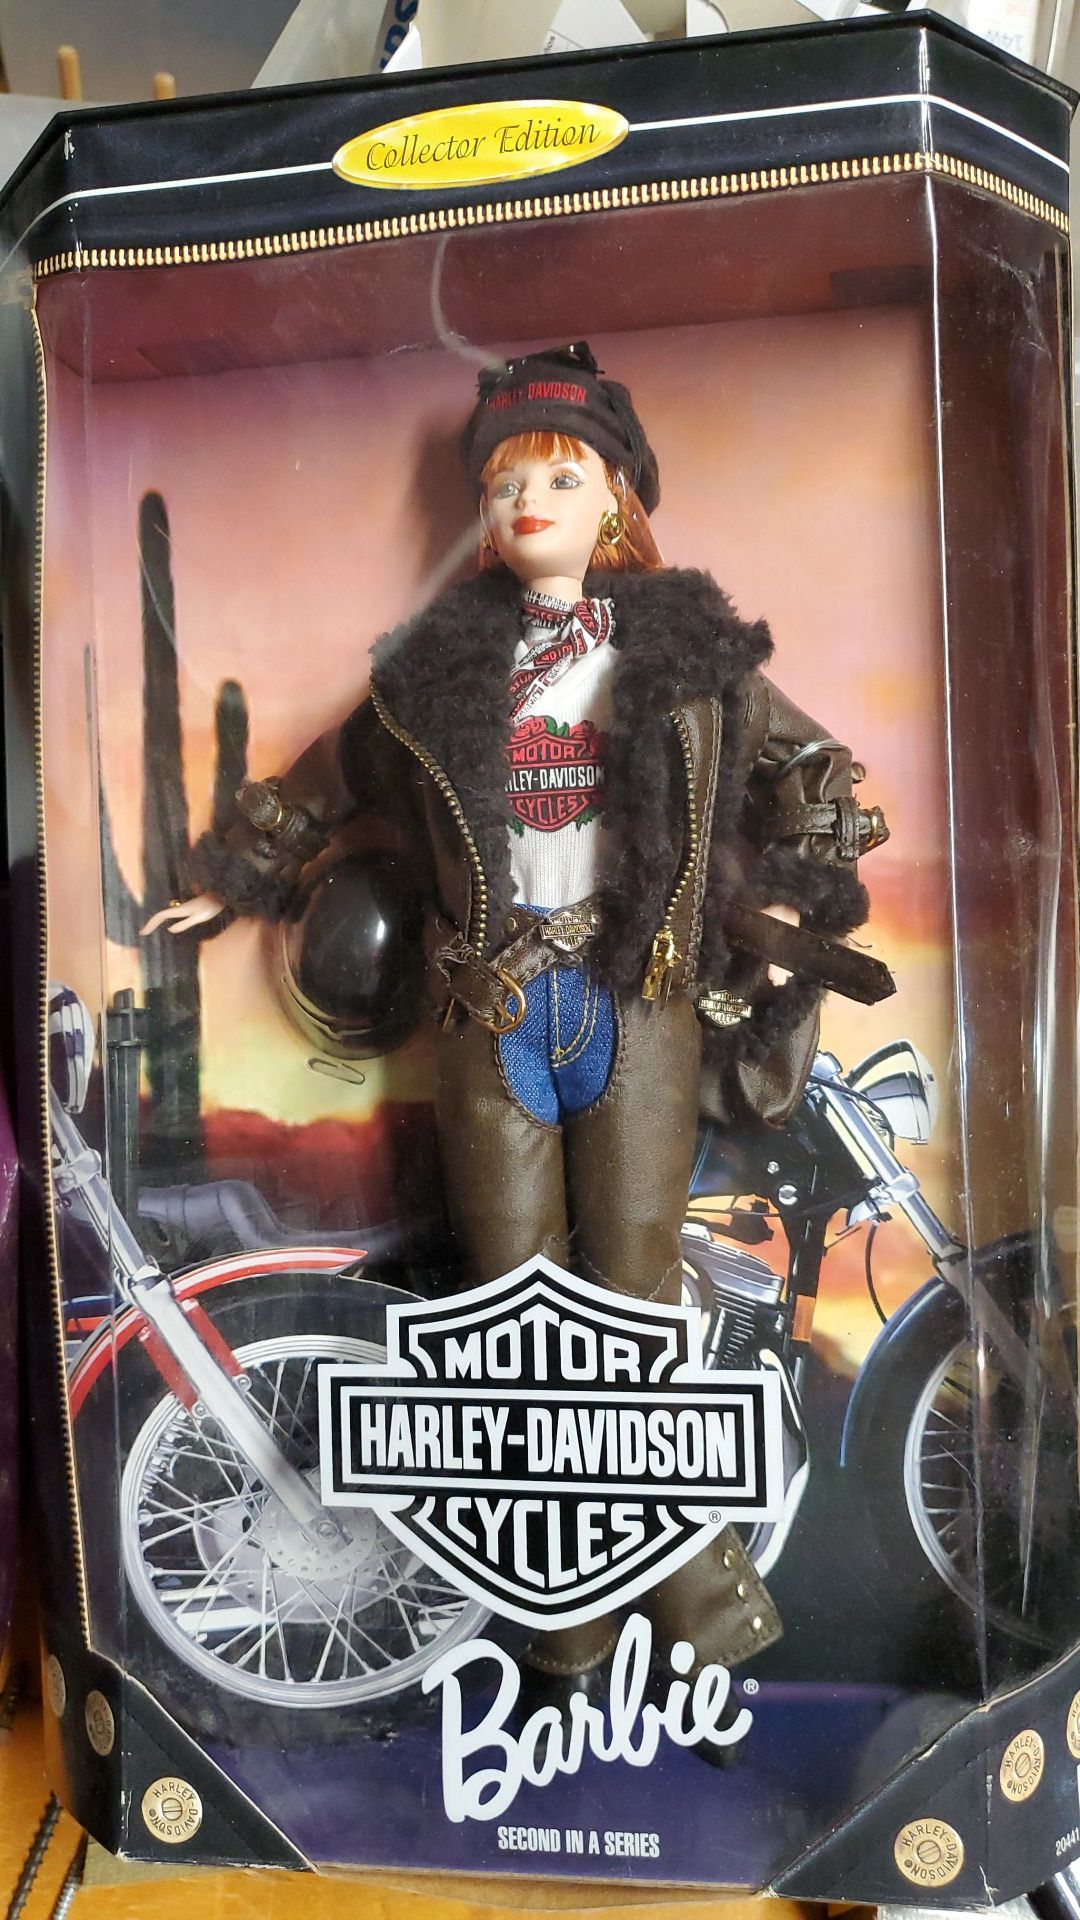 Harley Davidson barbie doll $75